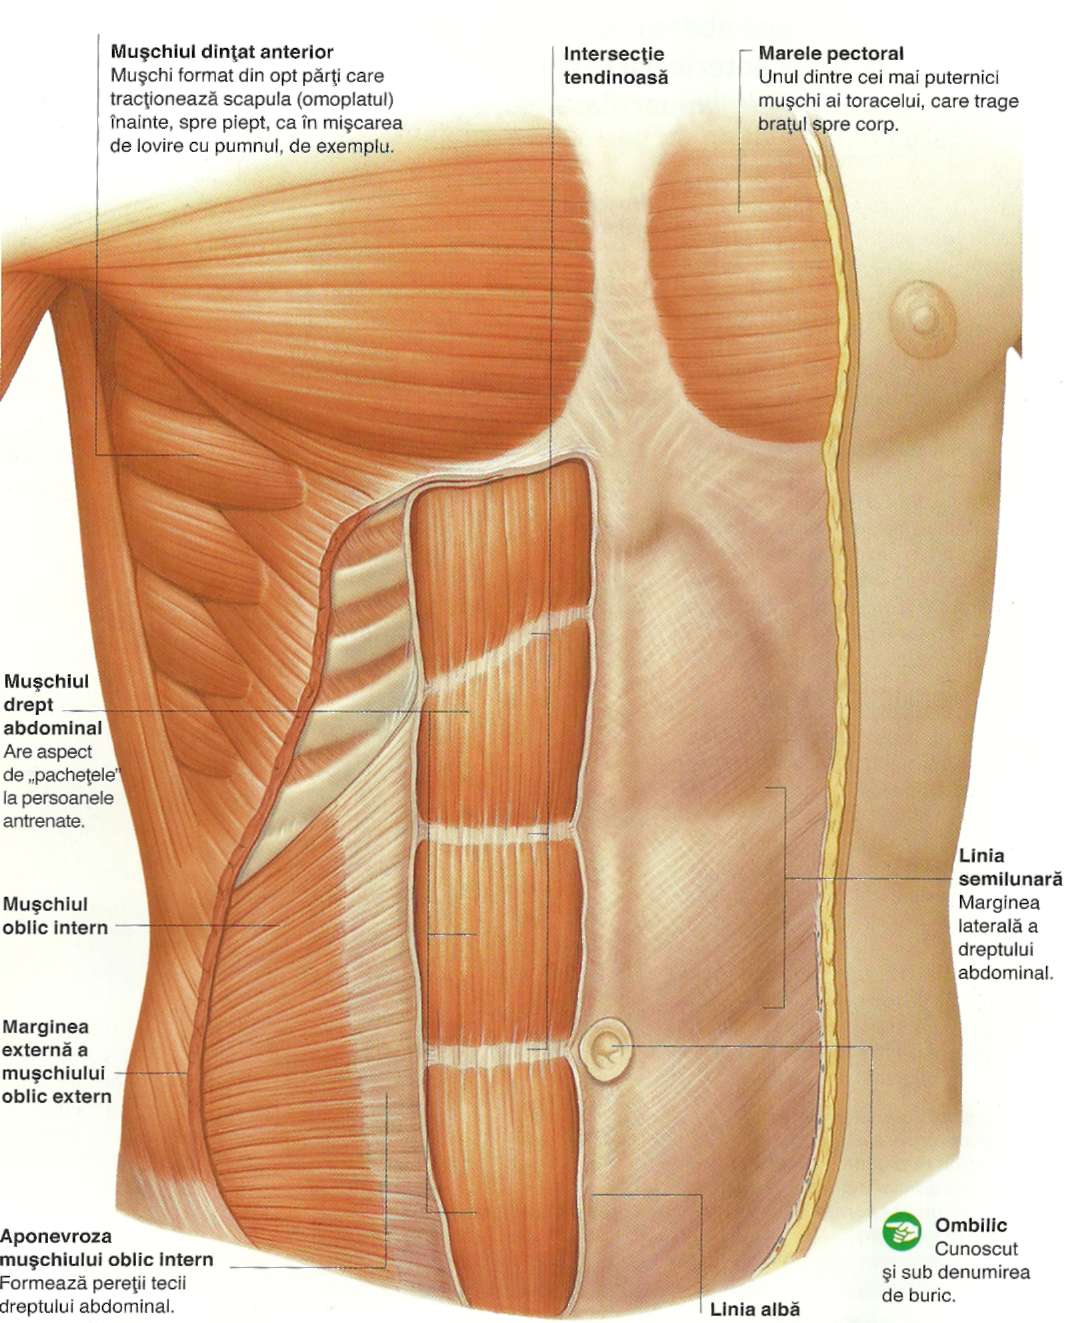 Herniile abdominale: simptome, diagnostic, tratament | bekkolektiv.com